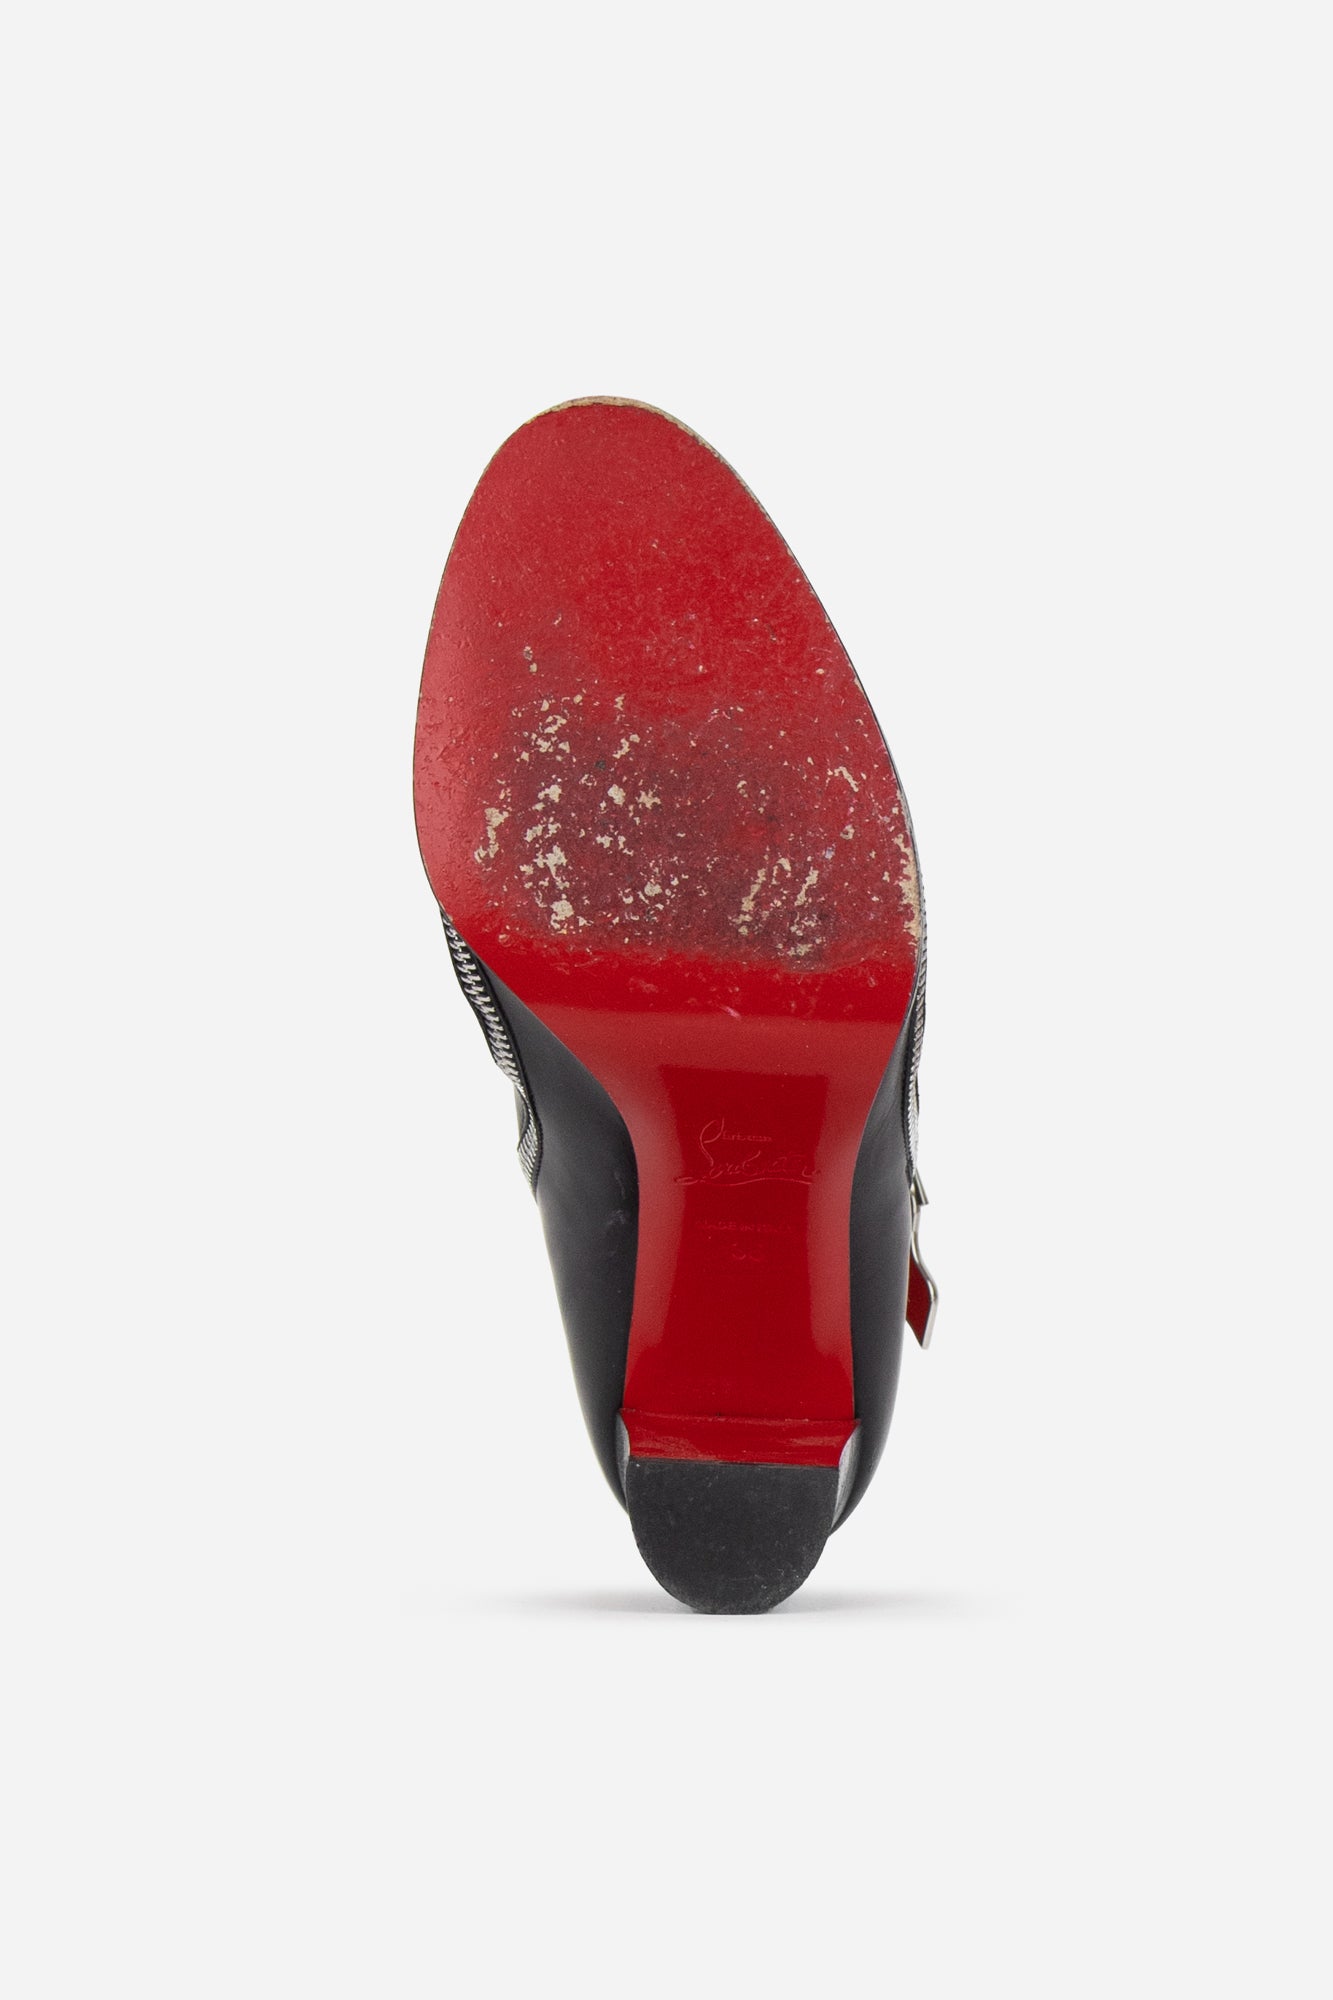 Black 'Veryvee' Ankle Boot 85 with Zipper Details